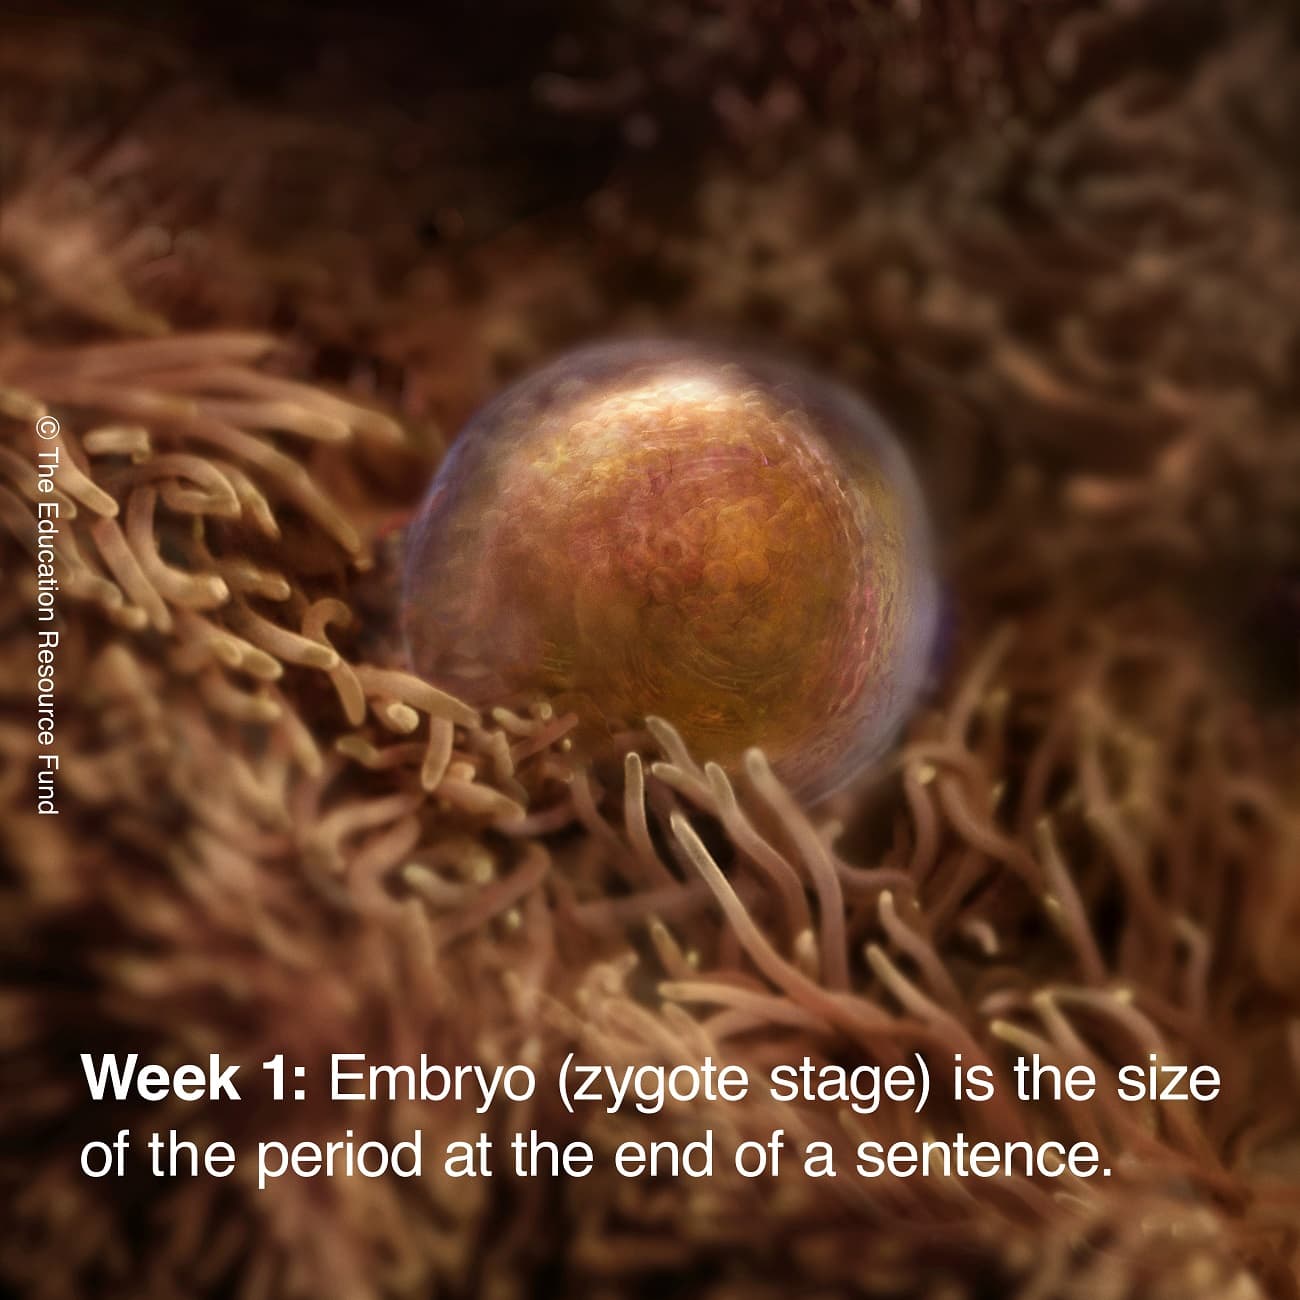 Embryo alive in the fallopian tube in the first week following fertilization